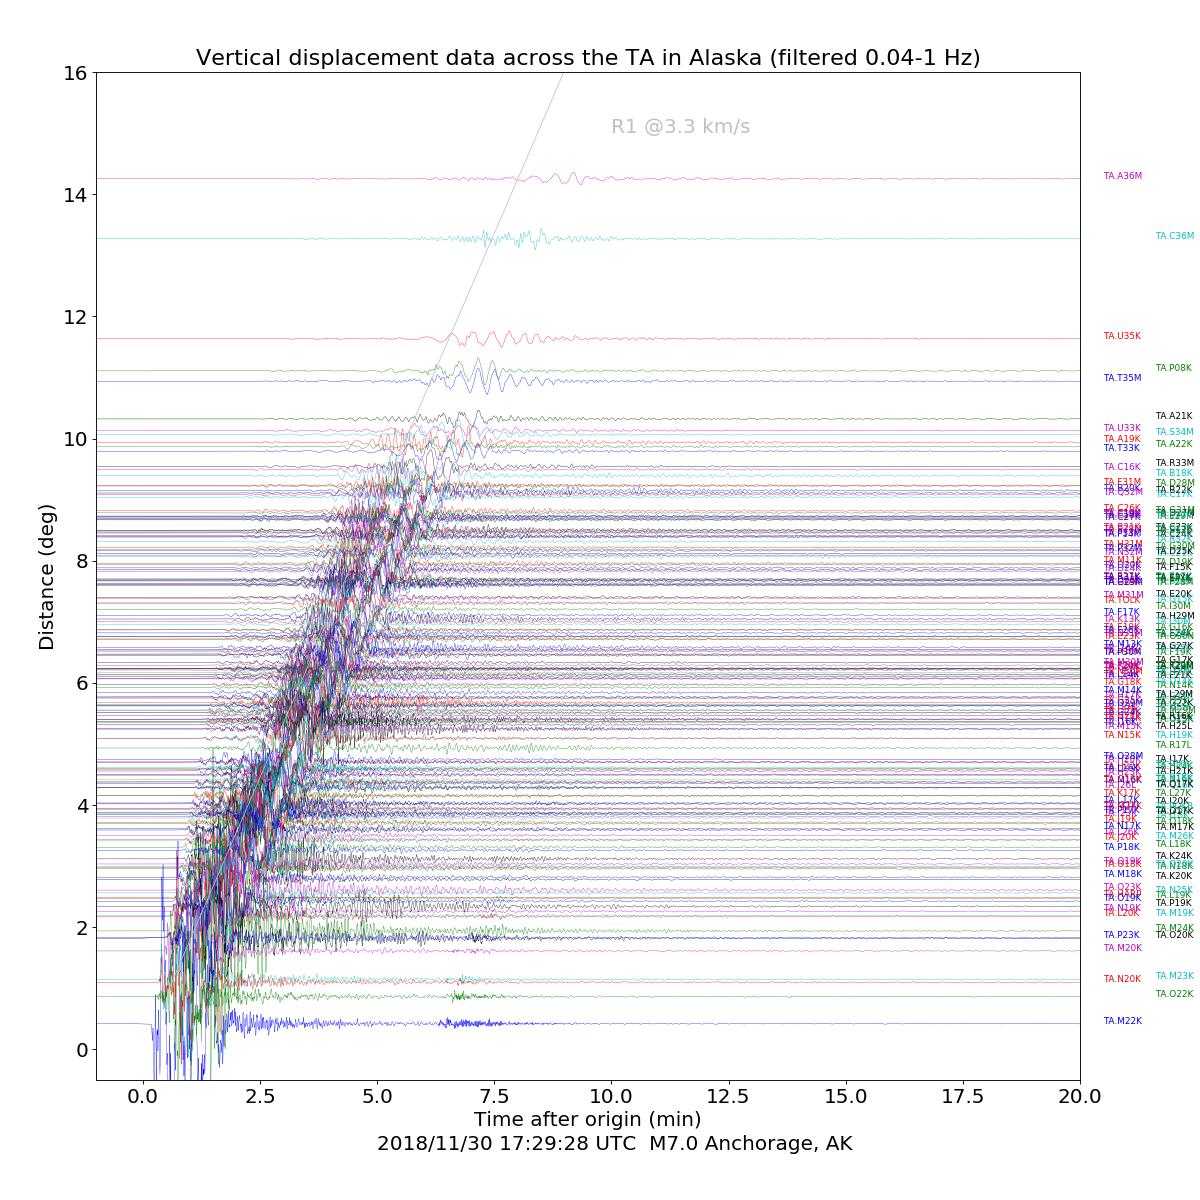 Vertical displacement data across TA in Alaska